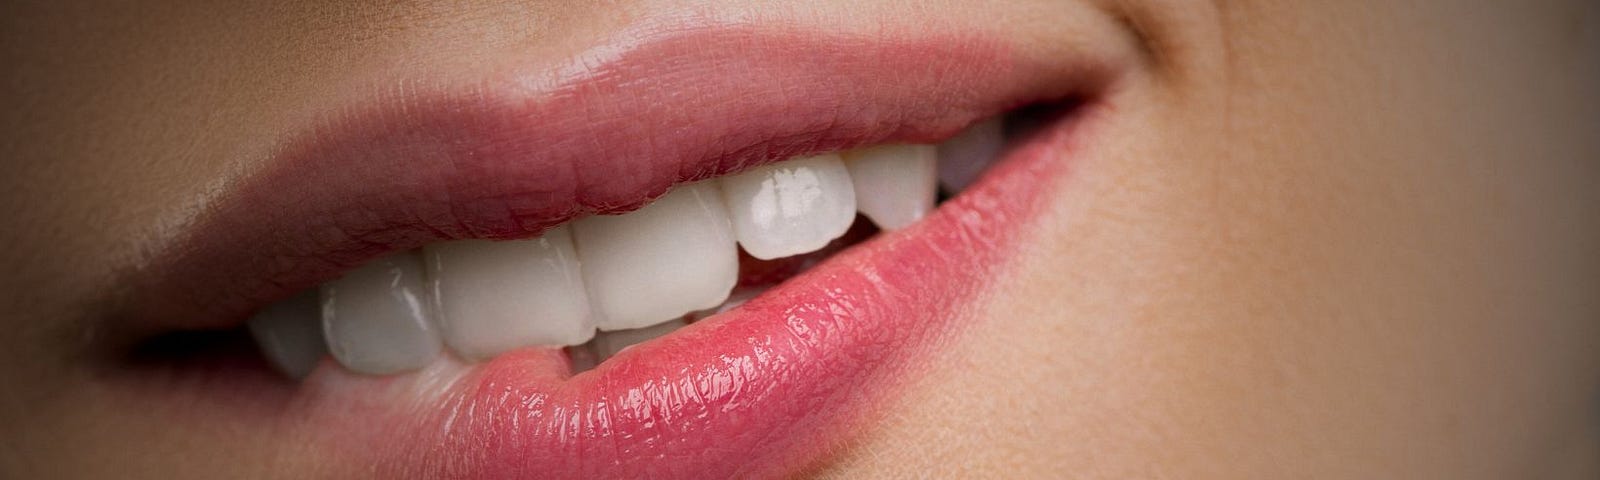 a woman bites her bottom lip seductively